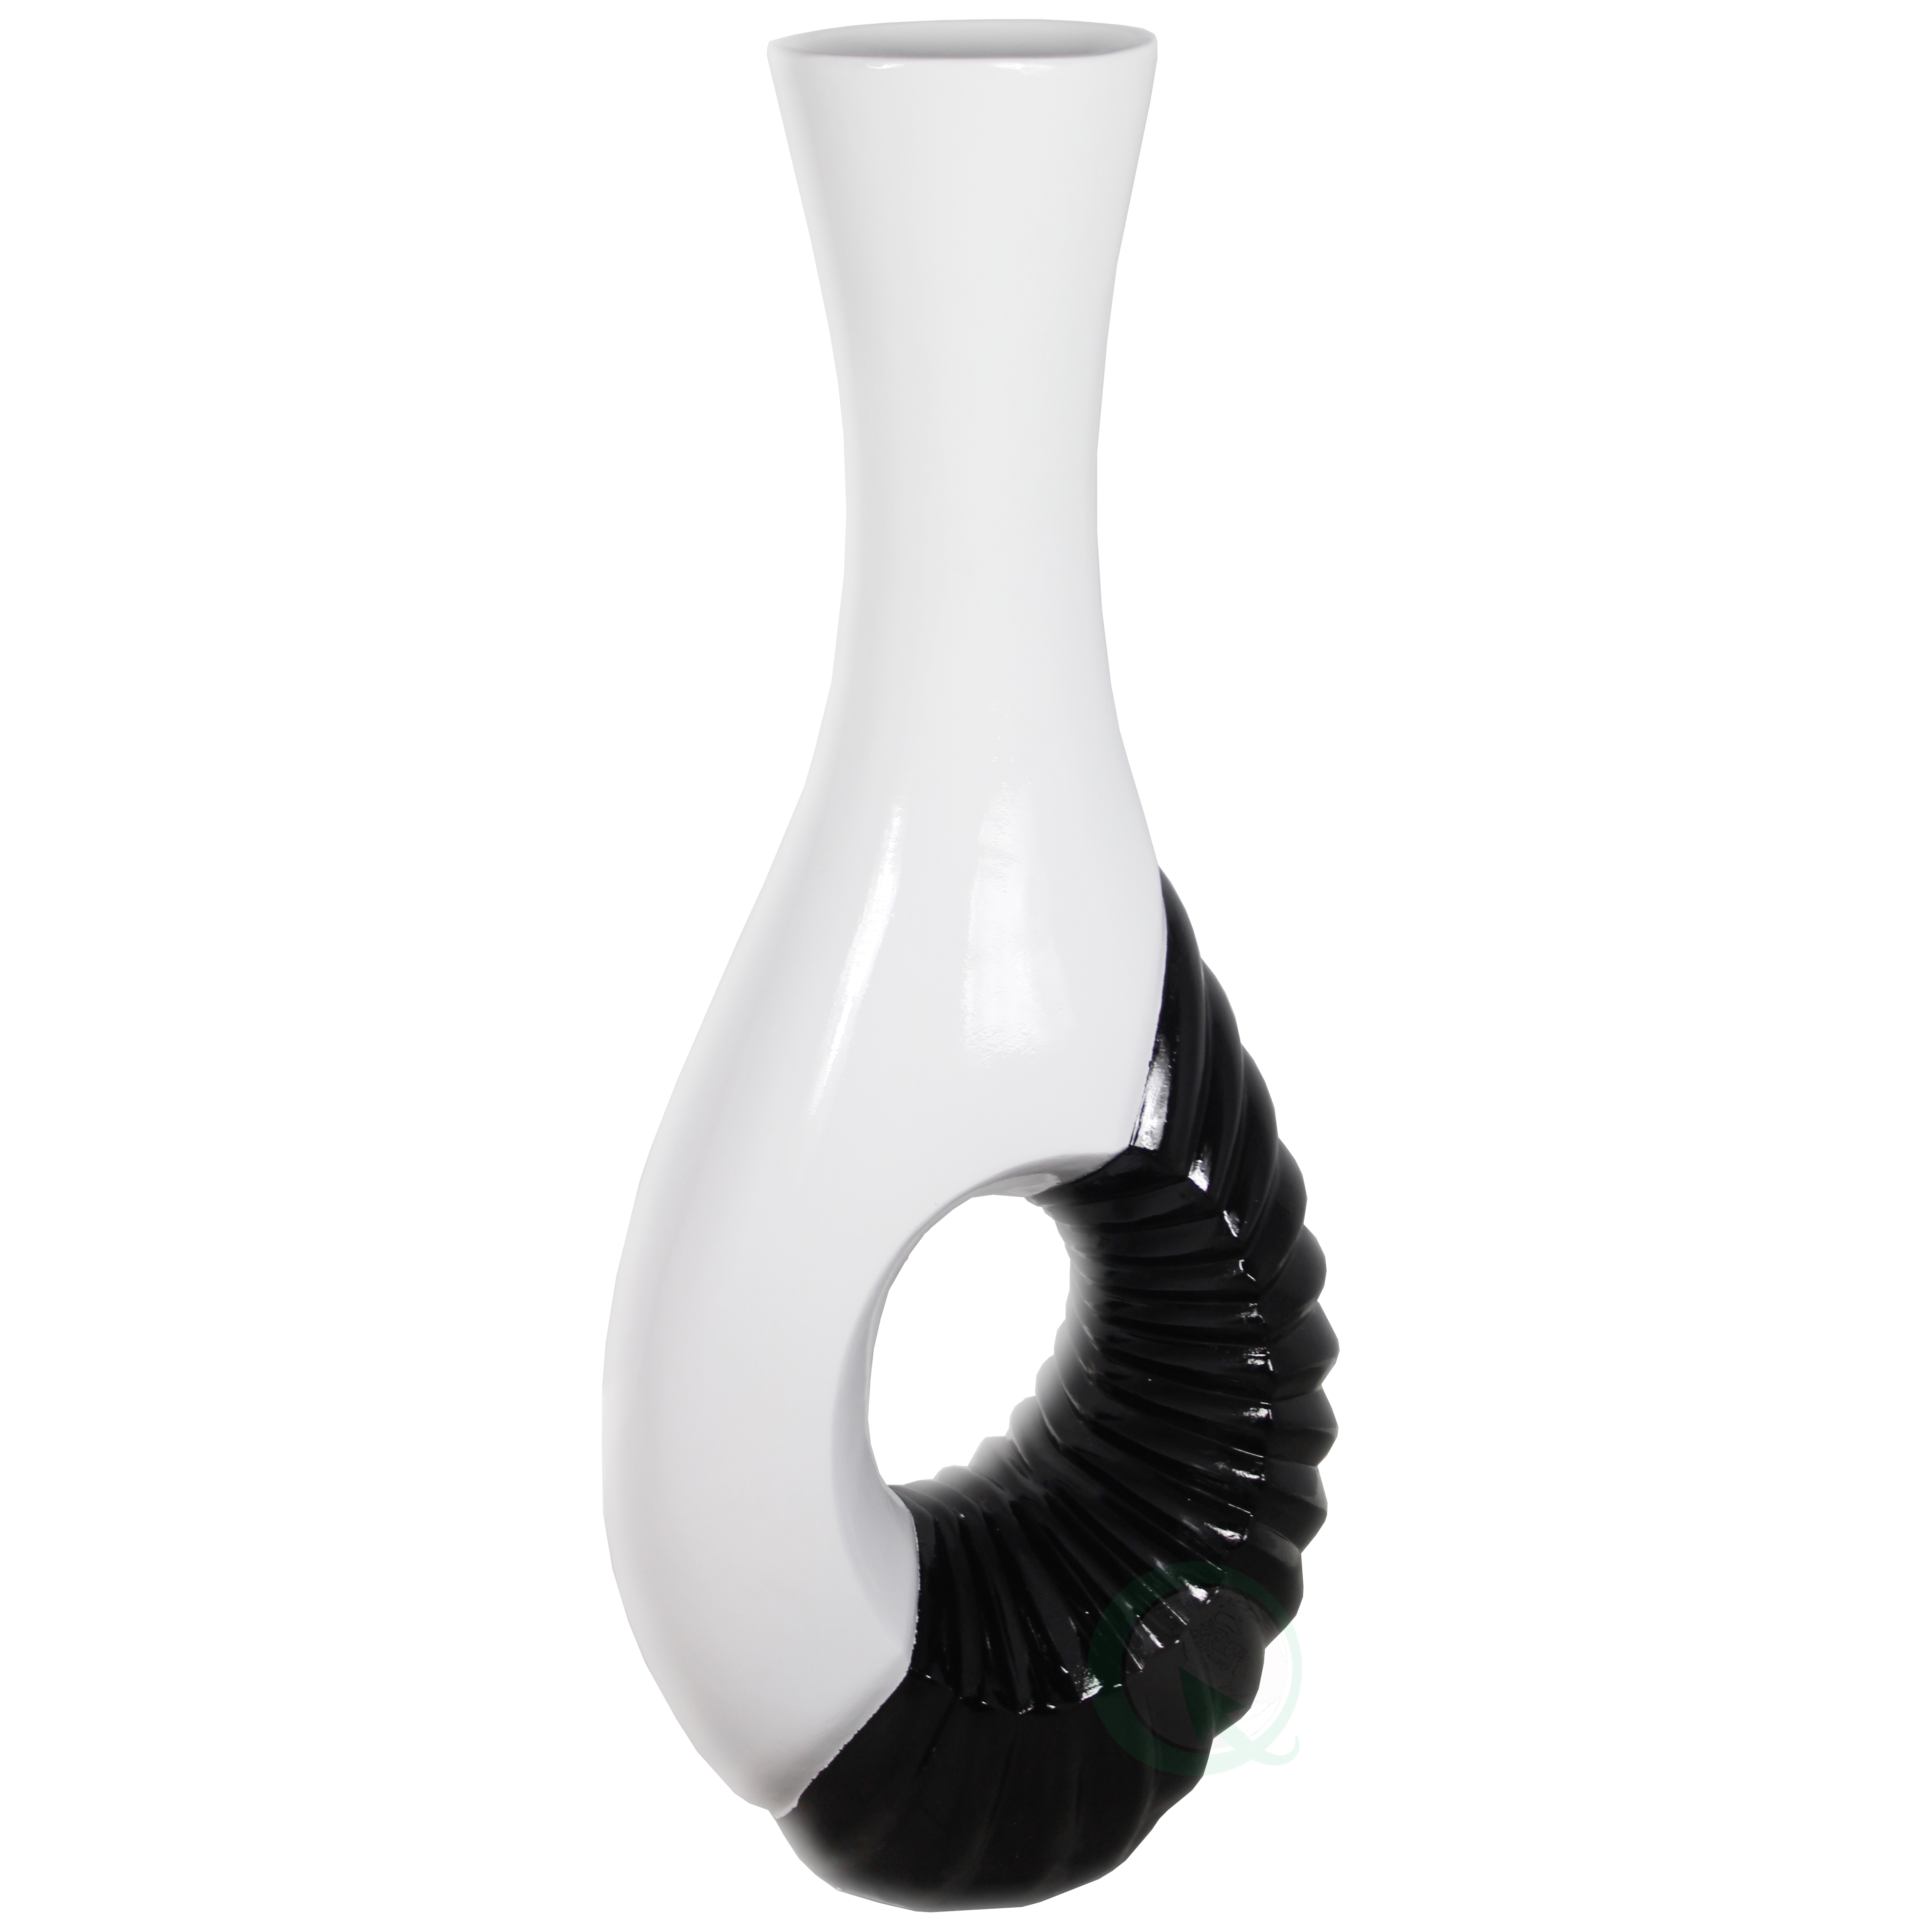 Modern Black And White Large Floor Vase - 43 Inch Tall, Contemporary Home Decor, Minimalist Design, Elegant Room Accent, Statement Piece